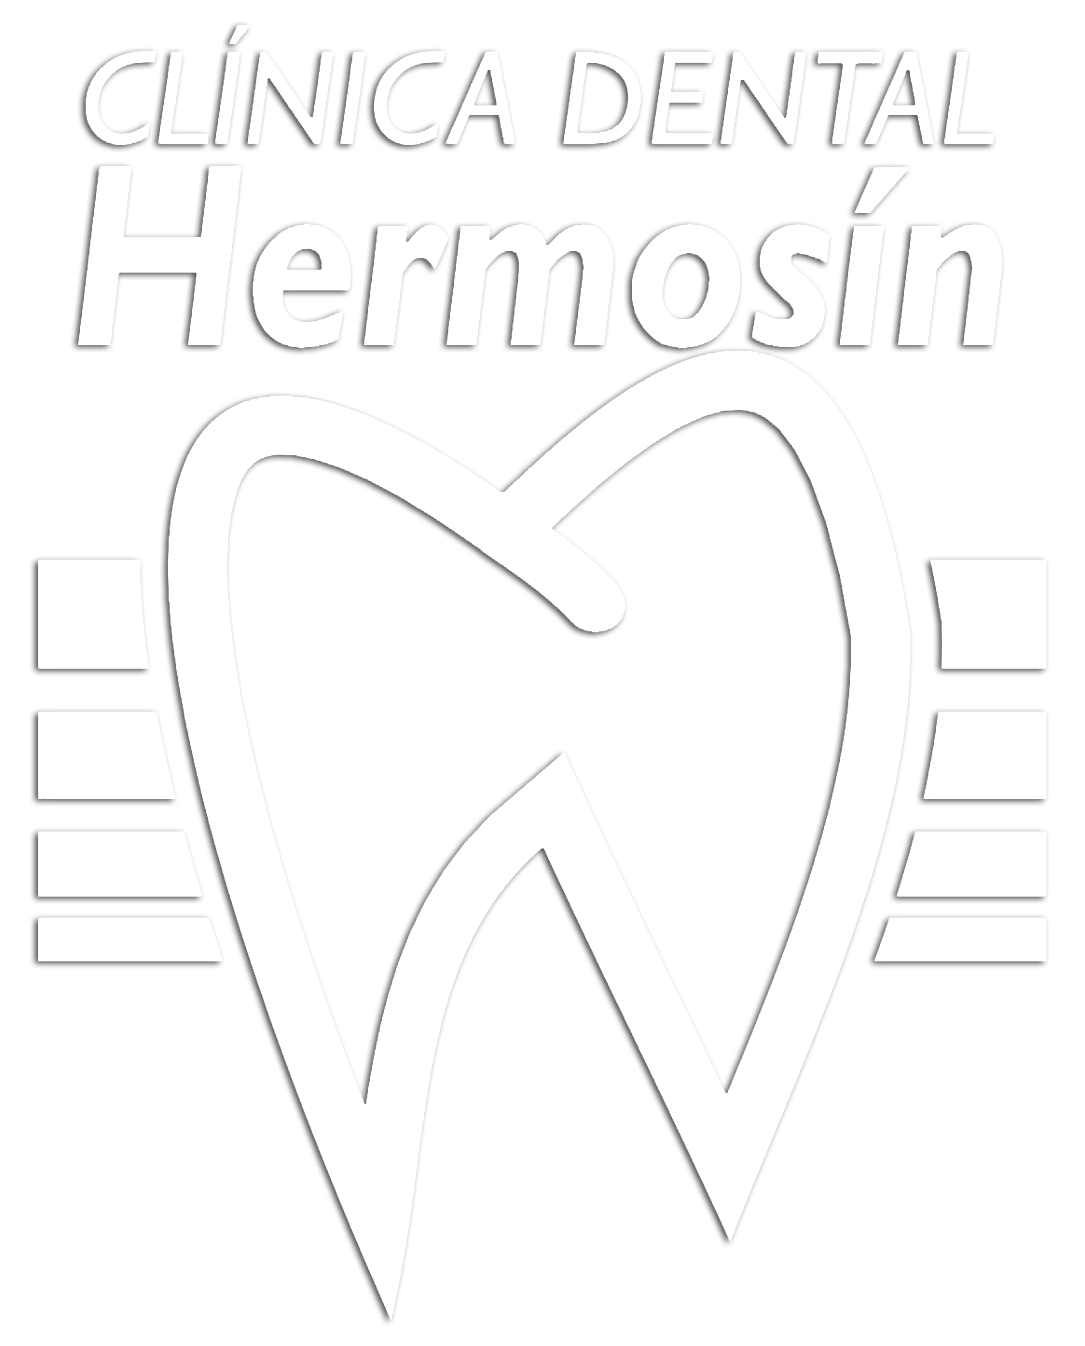 clinica-dental-hermosin-logo-blanco